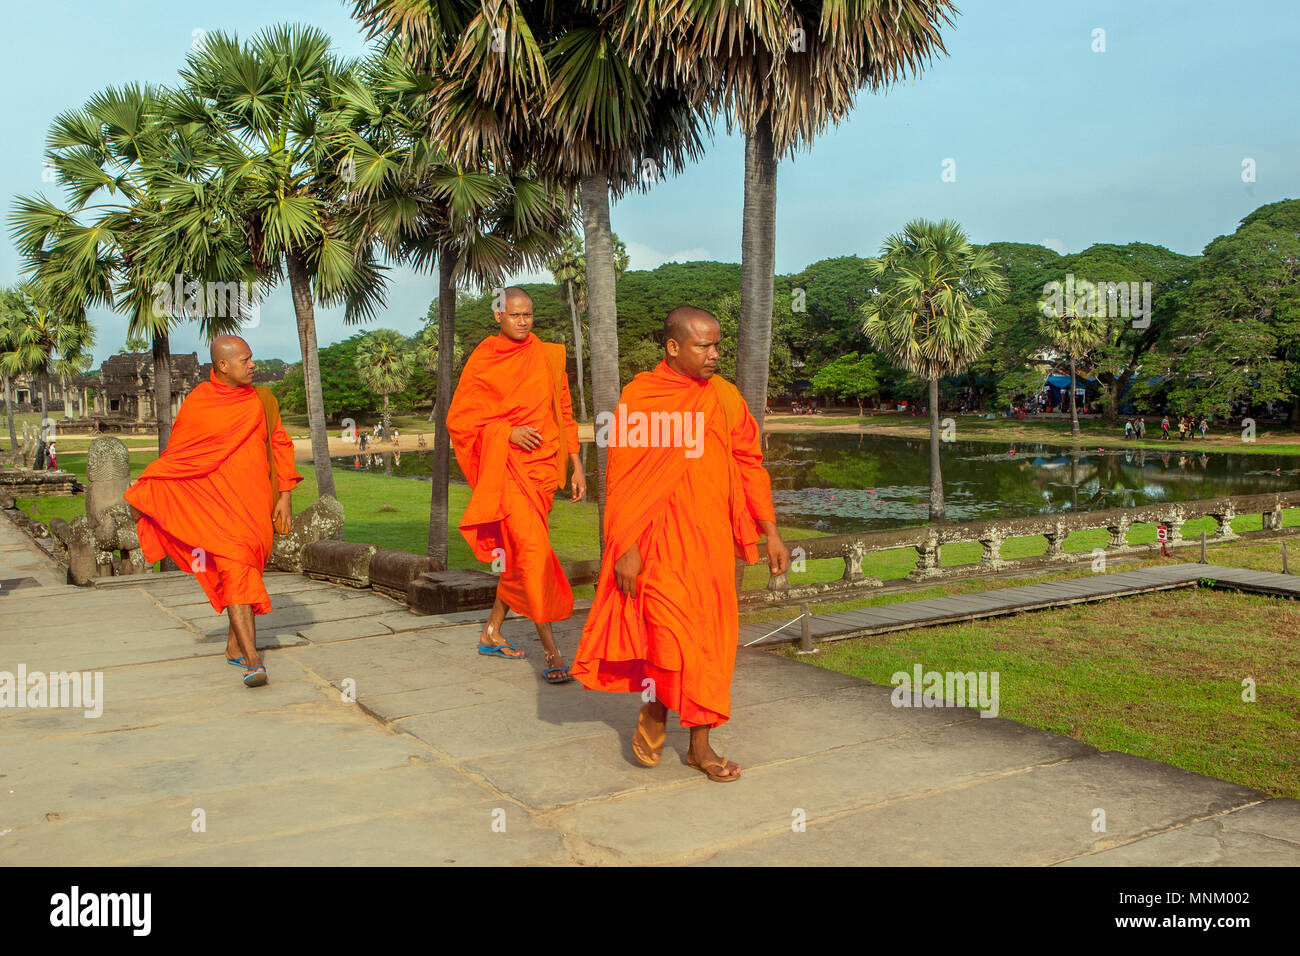 Theravada monaci buddisti indossare vesti uttarasanga a.k.a. kashaya vesti. Il colore arancione indica i monaci dal sud-est asiatico. Siem Reap, Cambogia. Foto Stock